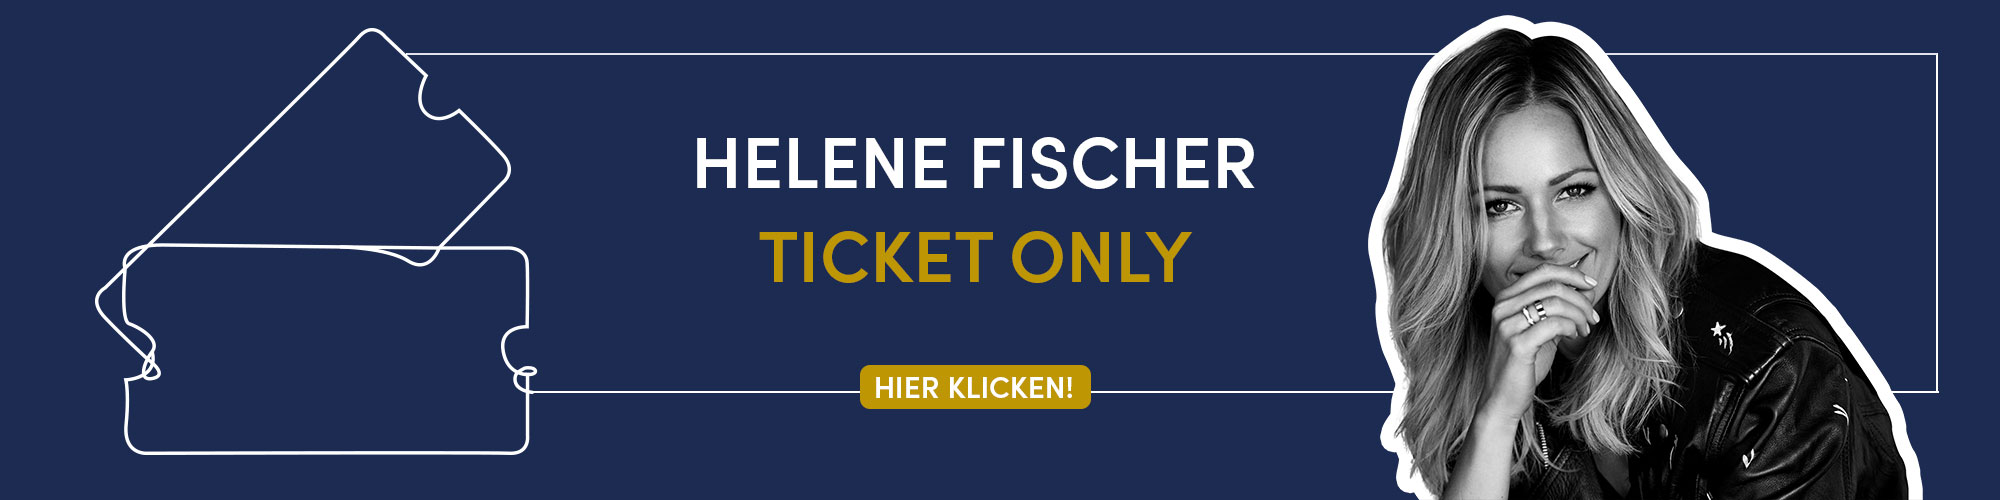 Banner_Helene-Fischer_Ticket-Only_2000x500_Jun2022_V1